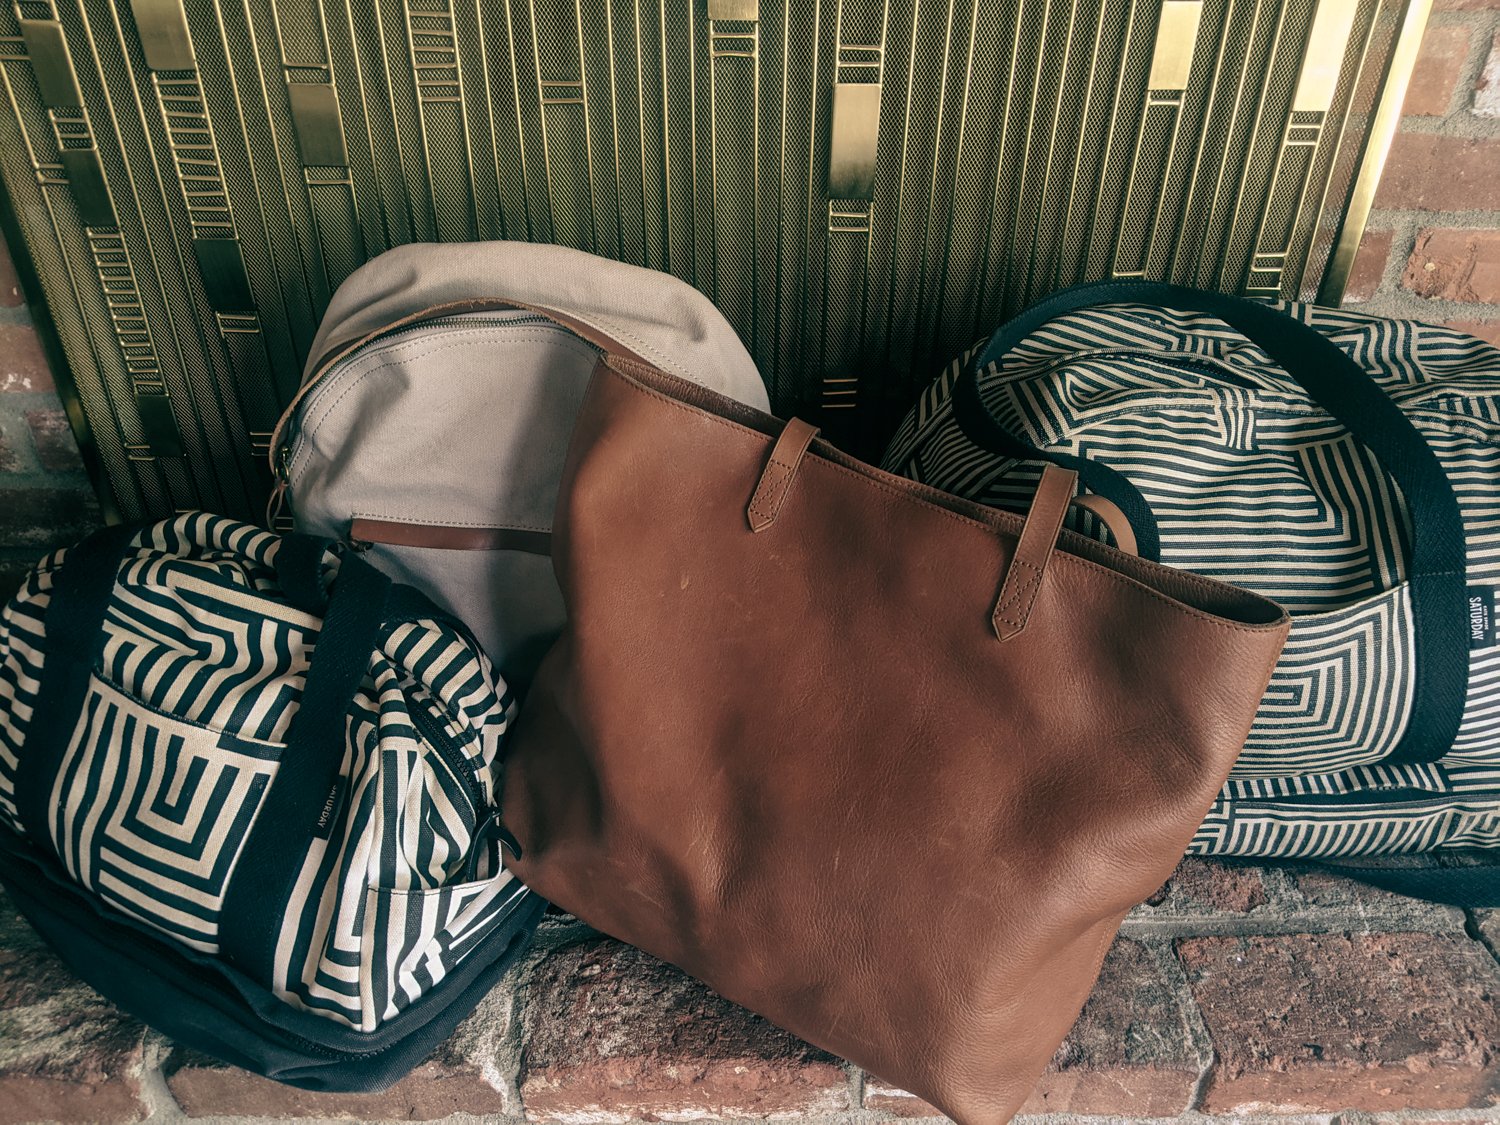 Airport Cover for Bag, Custom Size, Lv Bag Coat, Travel Essentials,  Wardrobe Organizer, Rain Protector, Oversize Bag, Bag Dust Cover, Clean 